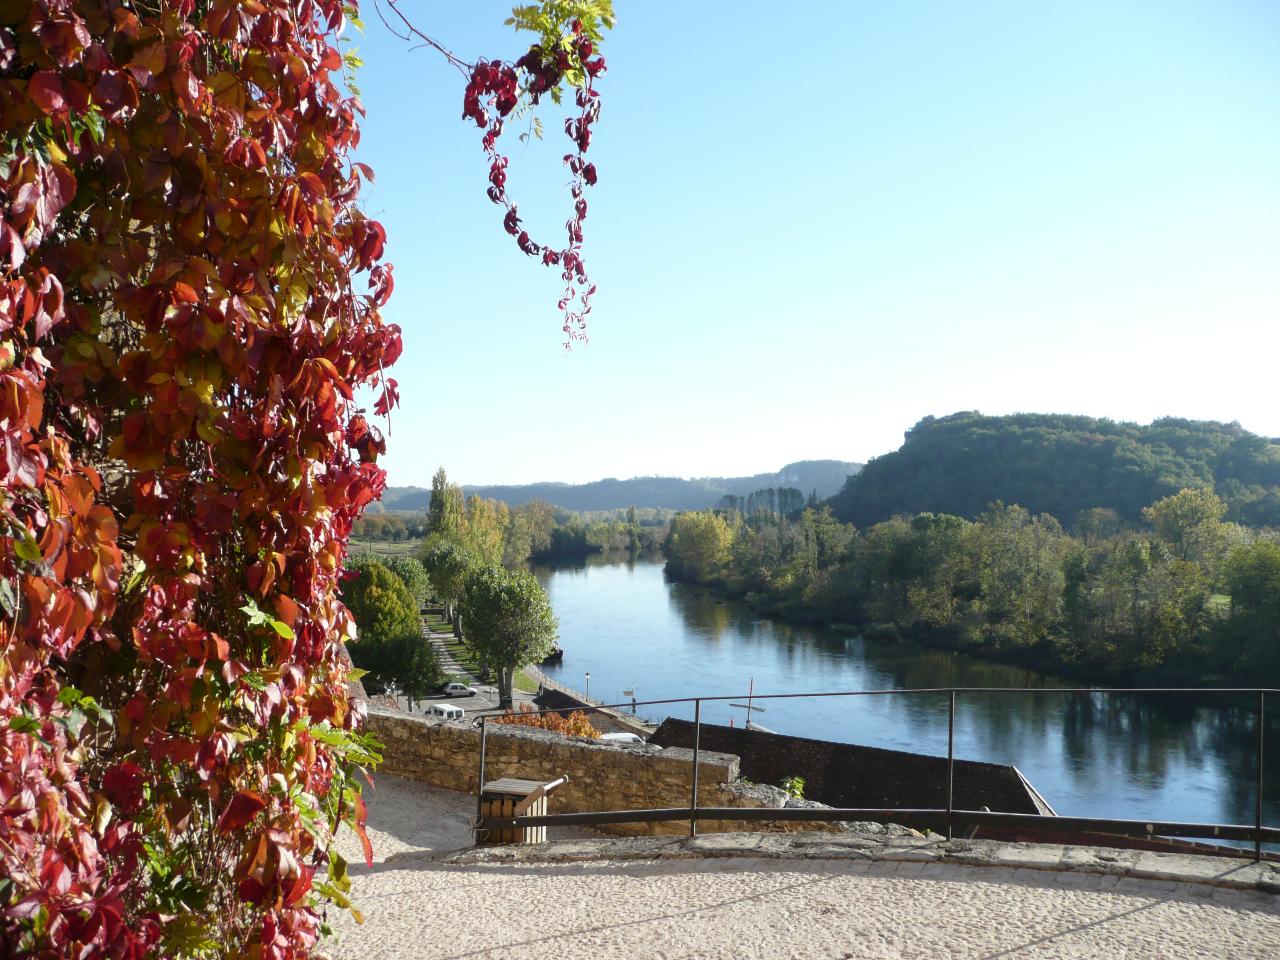 Domme, Beynac & La Roque-Gageac: A Private Journey Through Dordogne Villages